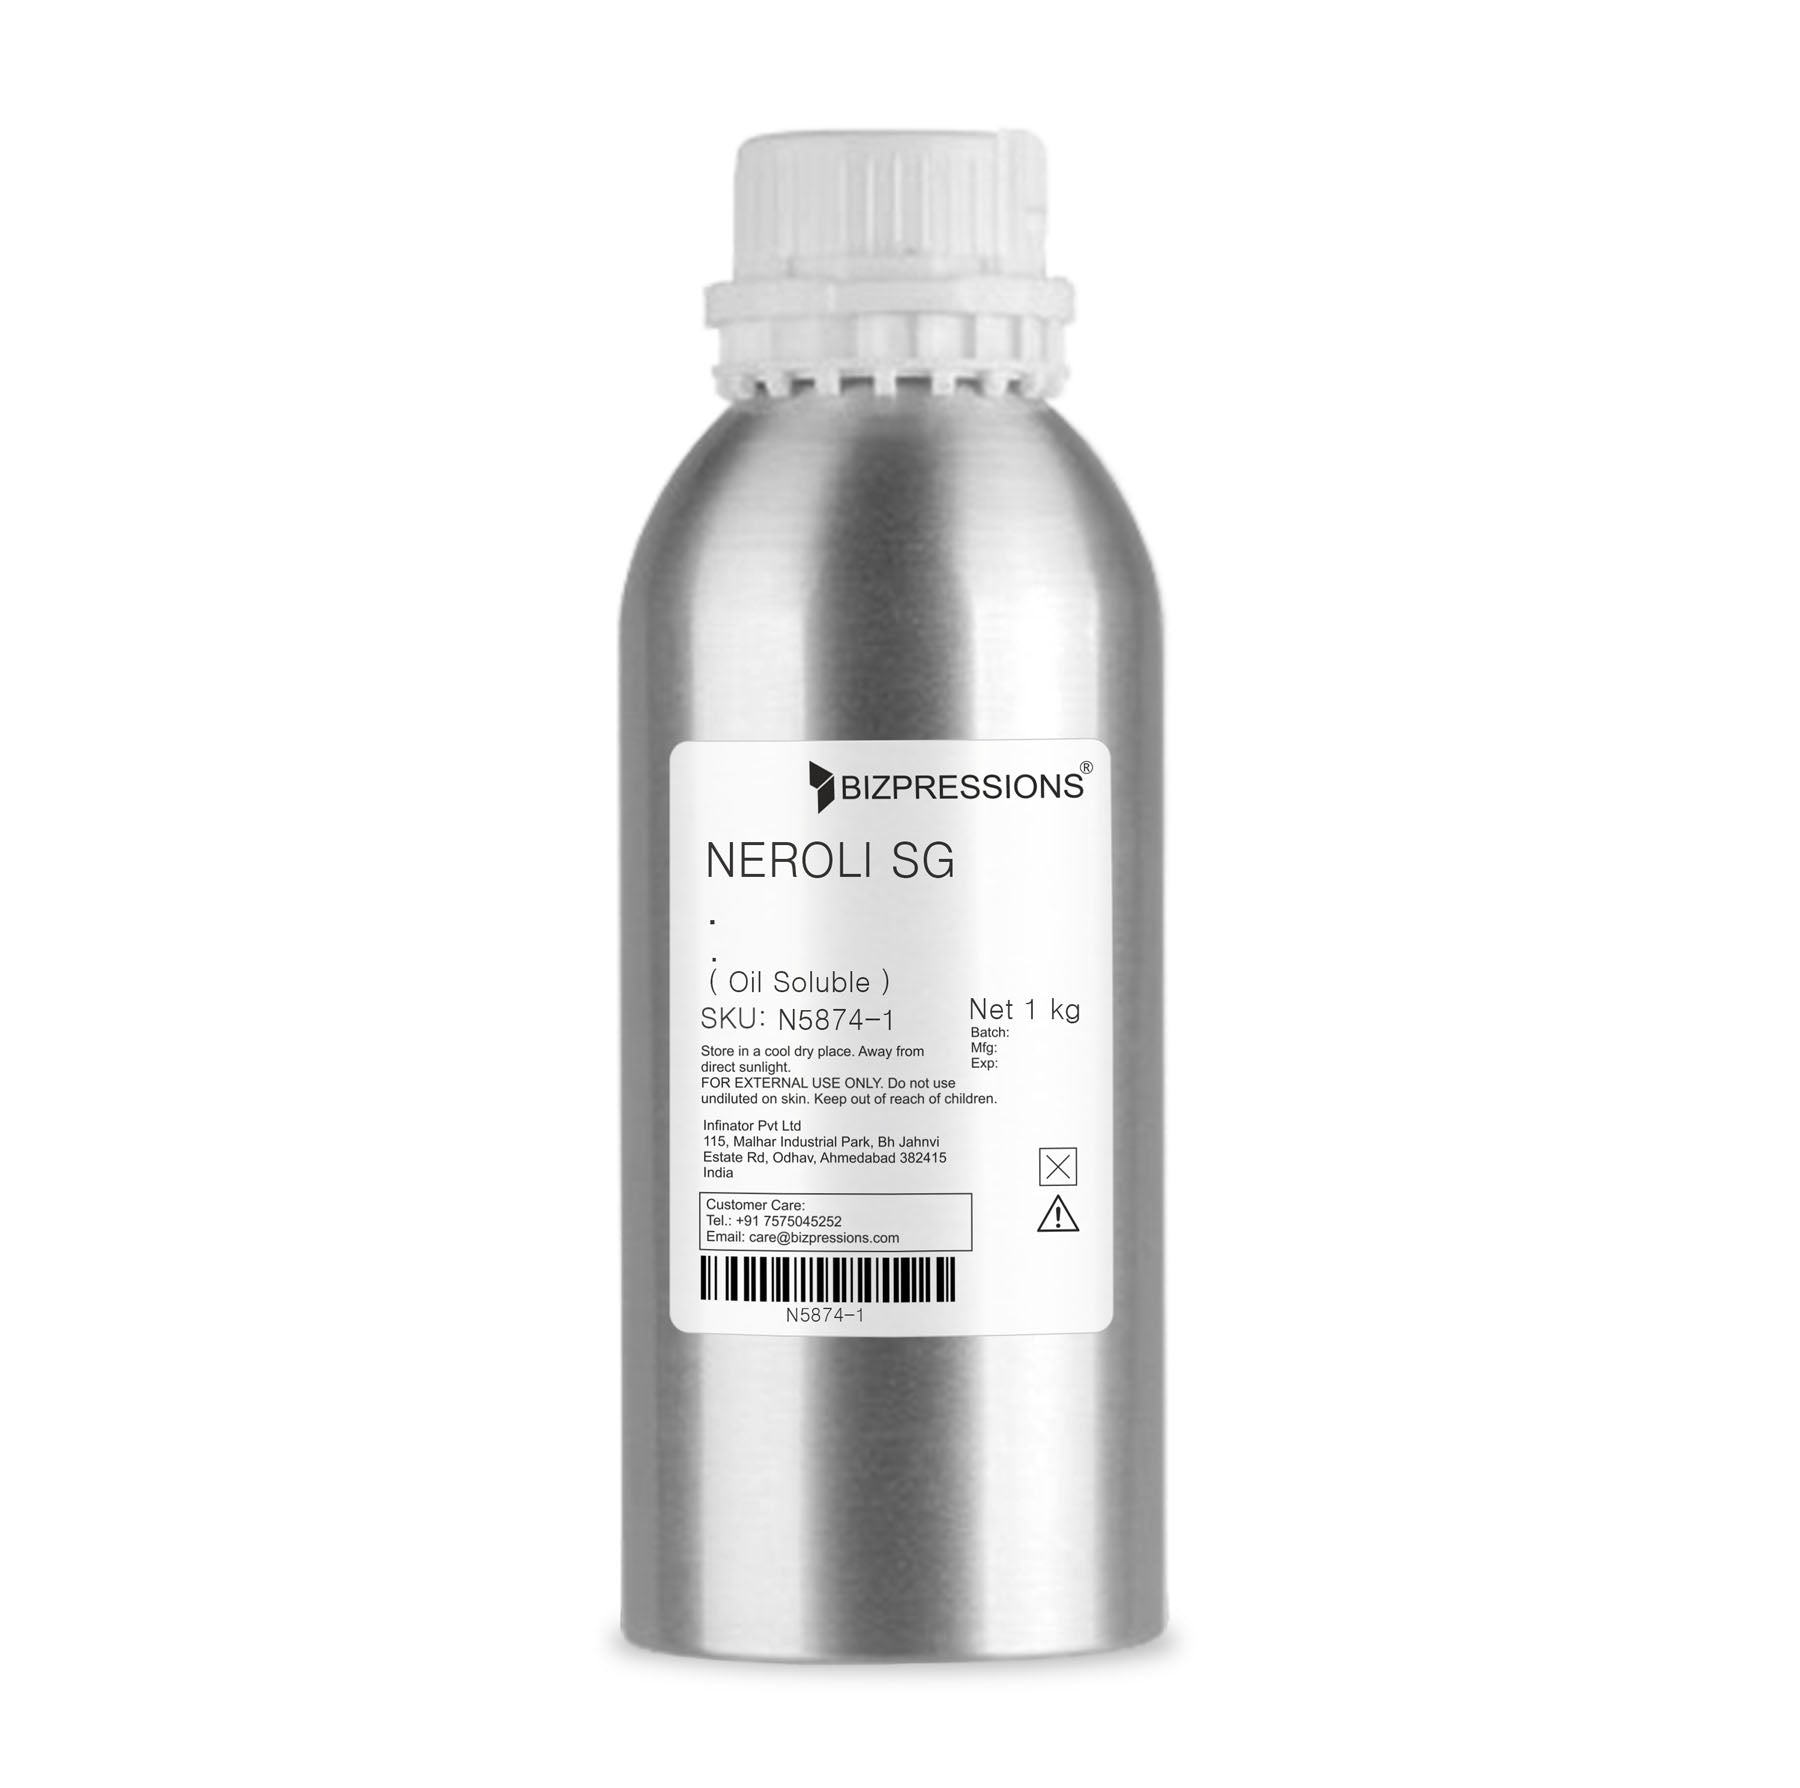 NEROLI SG - Fragrance ( Oil Soluble ) - 1 kg